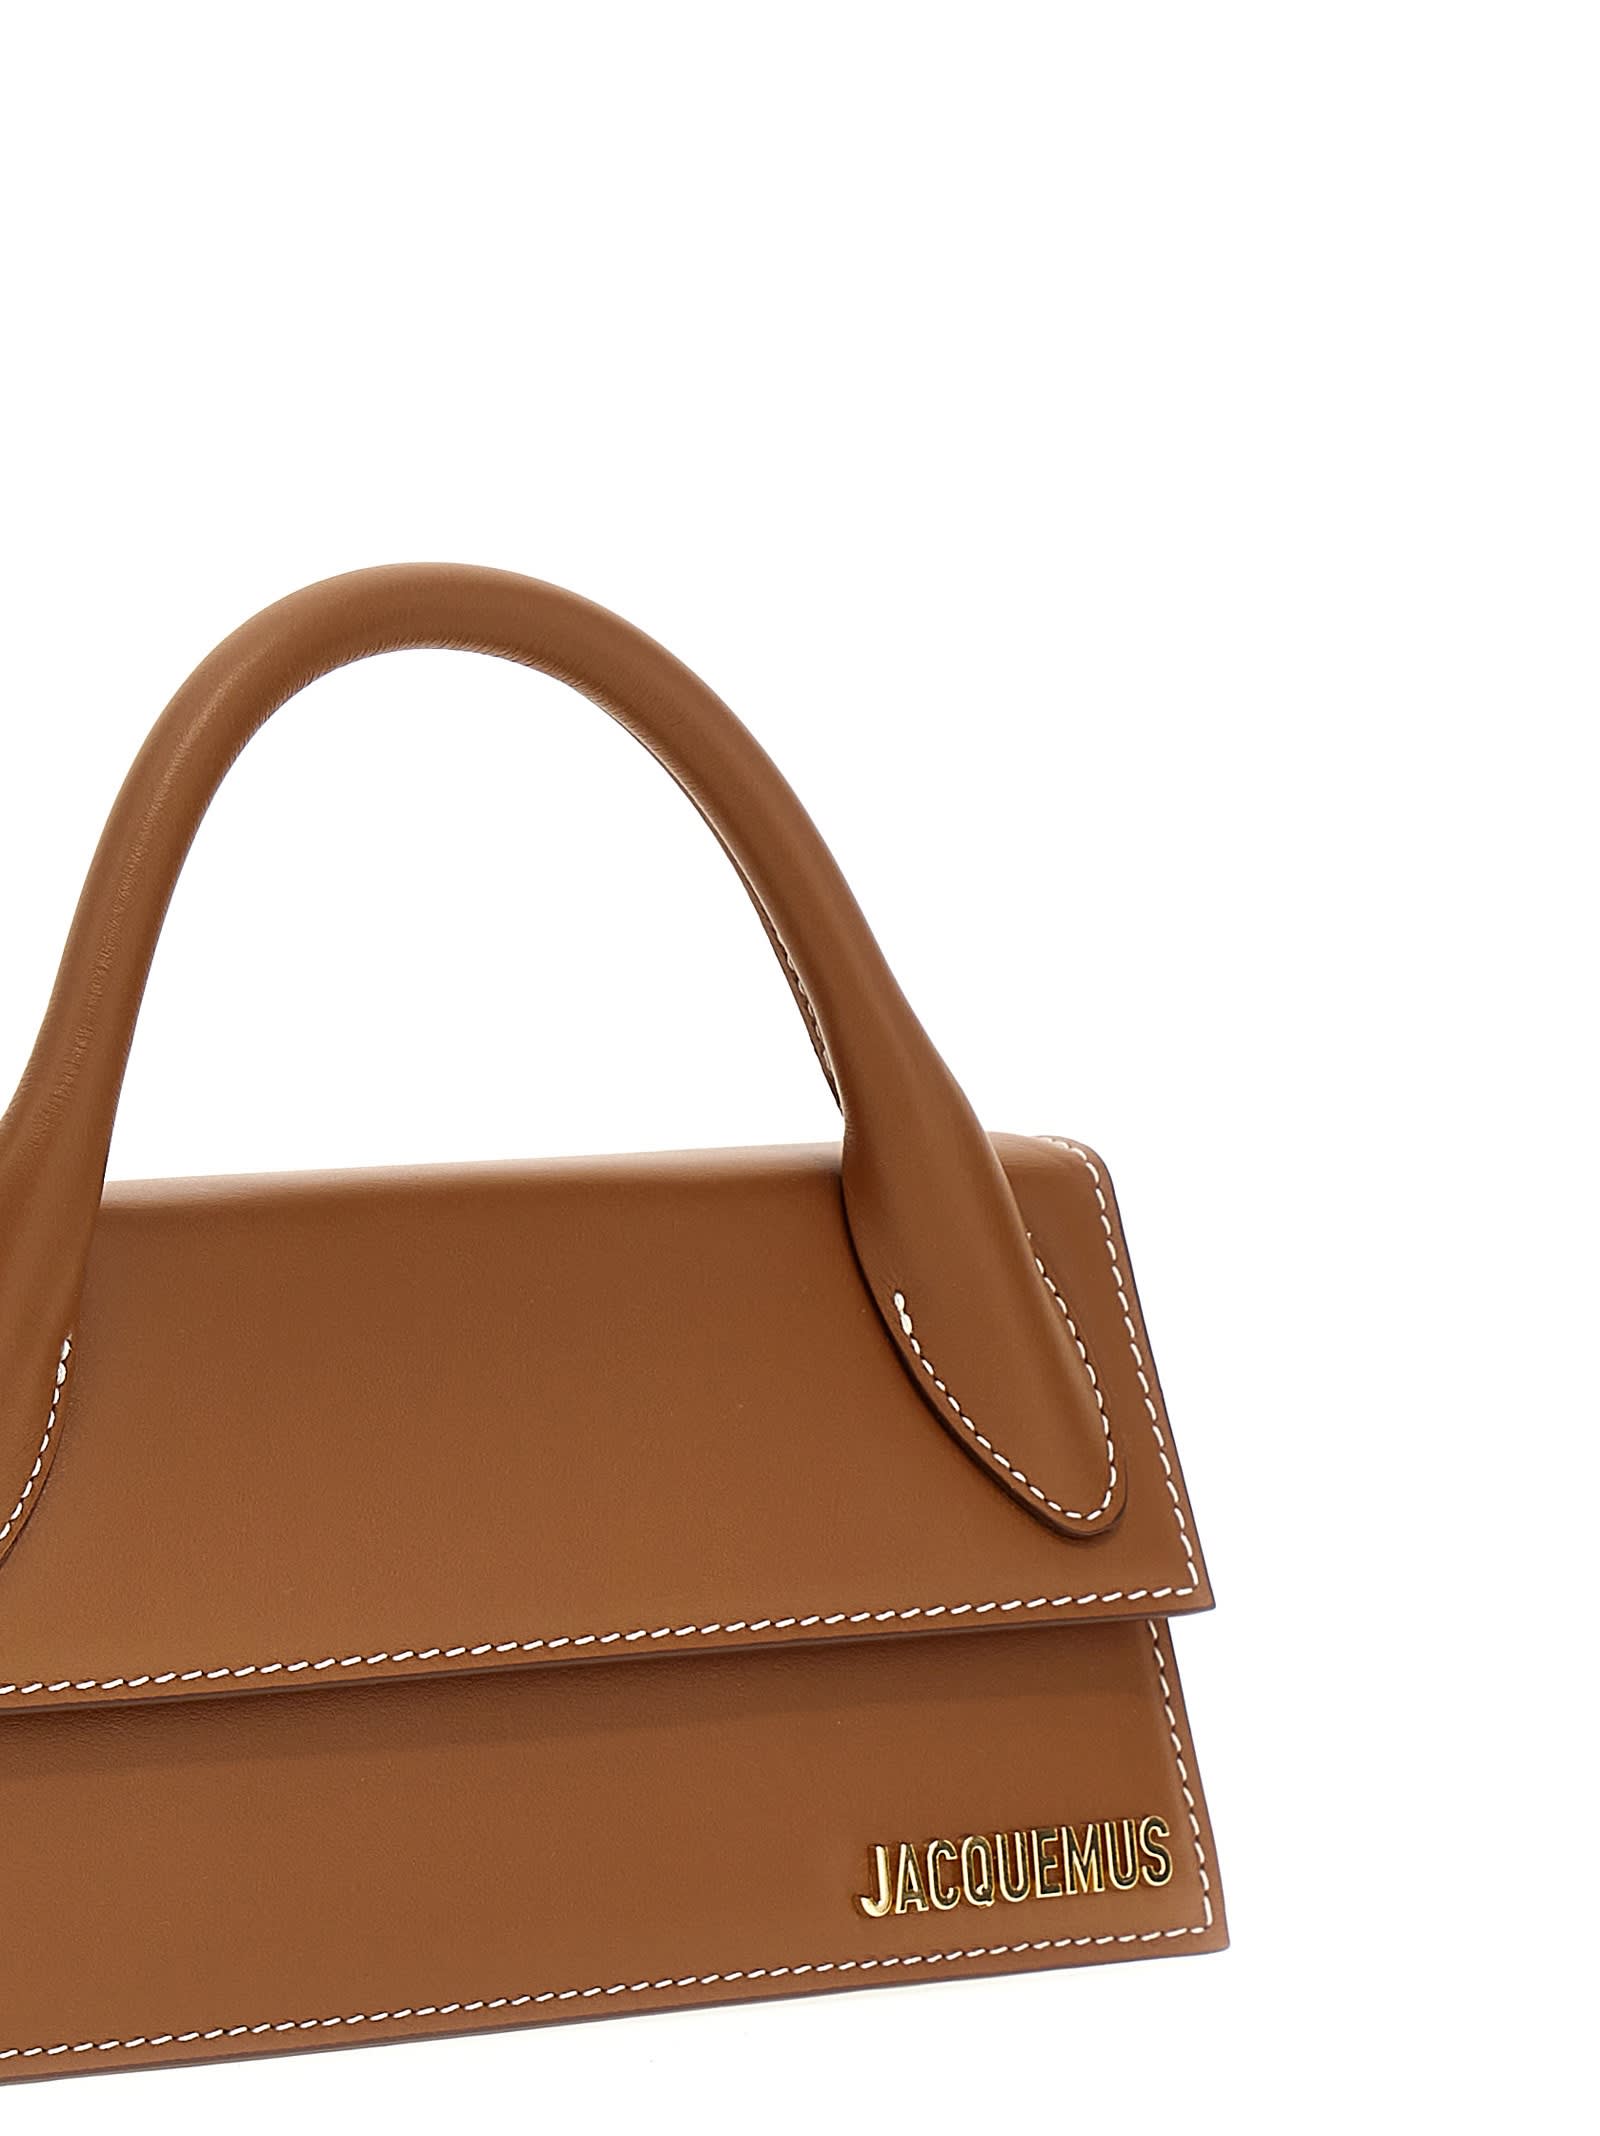 Jacquemus Le Chiquito Long Handbag in Brown